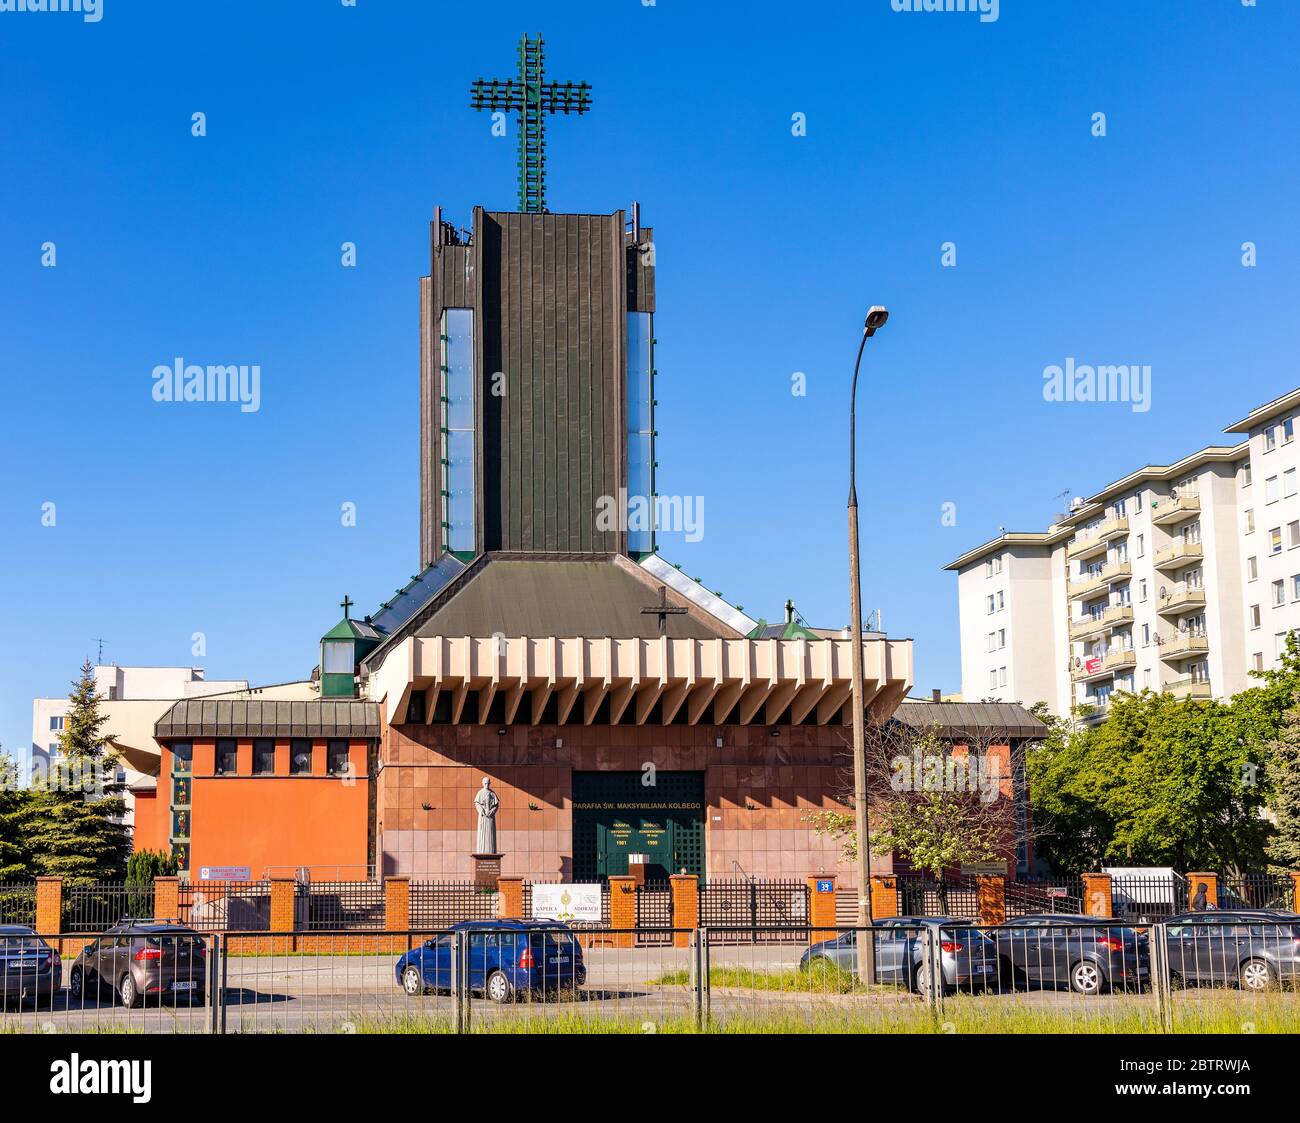 Warsaw, Mazovia / Poland - 2020/05/21: Facade of the St. Maximilian Colbe church - kosciol sw. Maksymiliana Kolbe - at ul. Rzymowskiego street in Moko Stock Photo